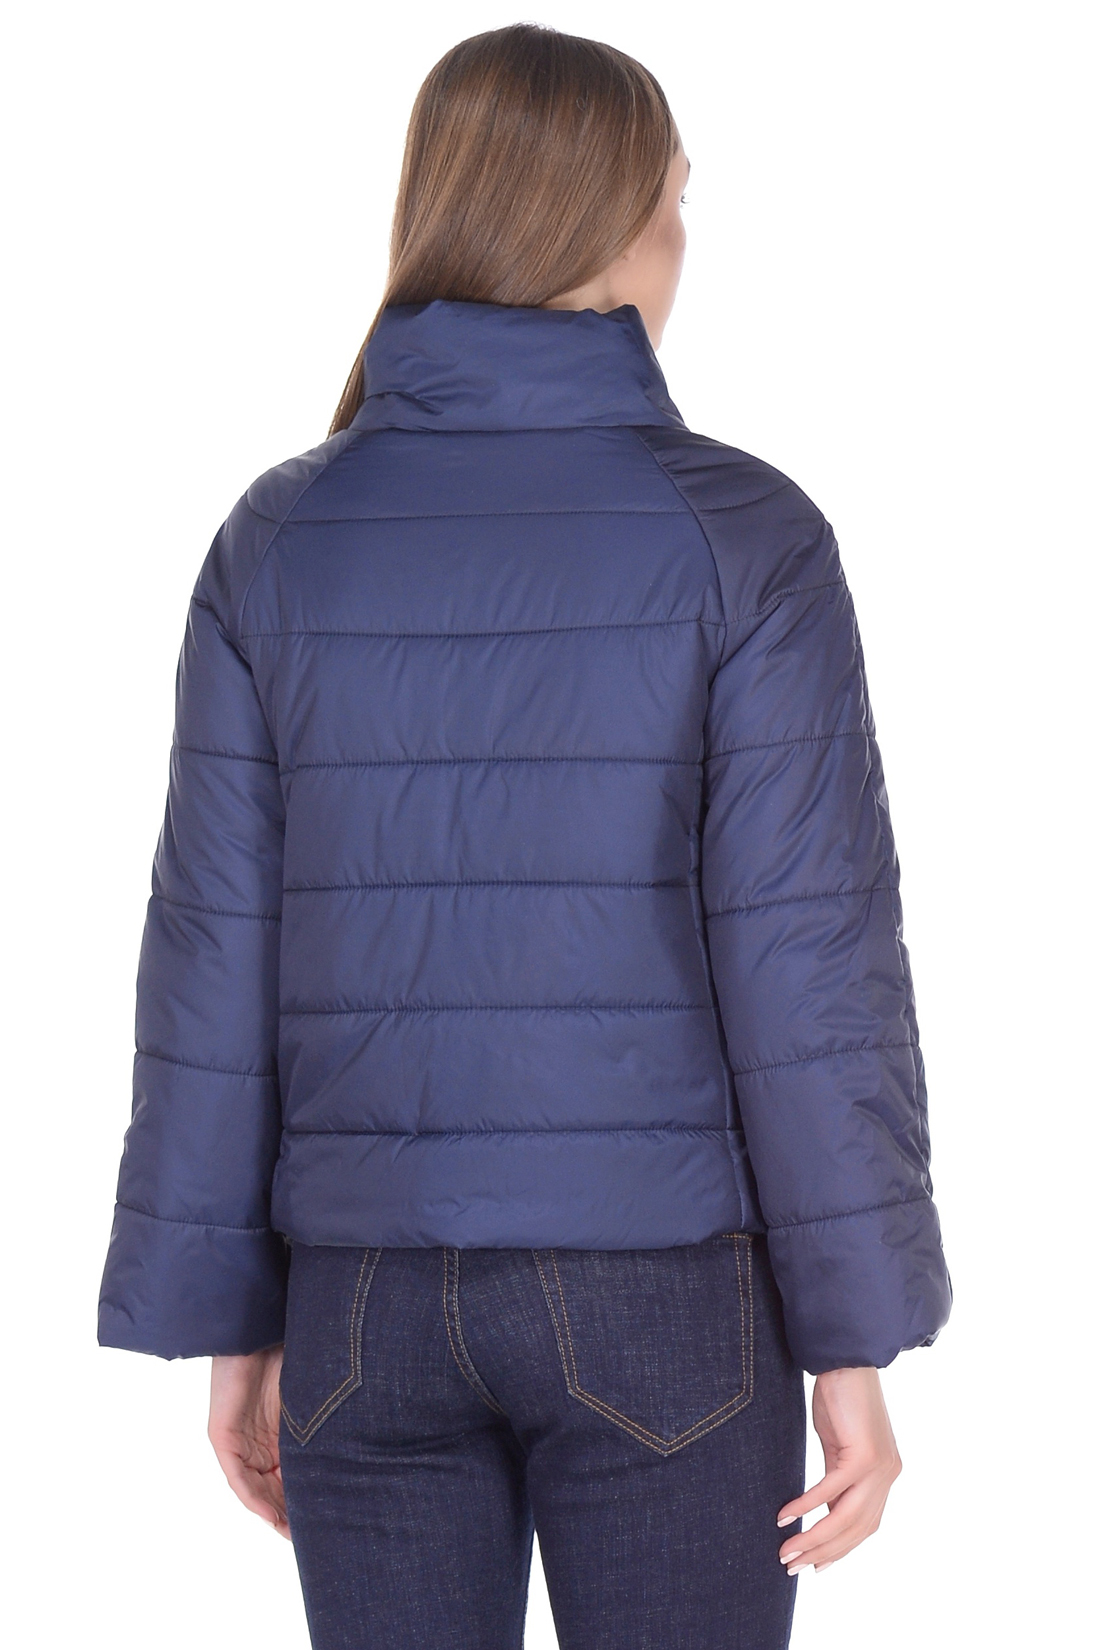 Куртка с рукавами-реглан (арт. baon B038045), размер XS, цвет синий Куртка с рукавами-реглан (арт. baon B038045) - фото 2